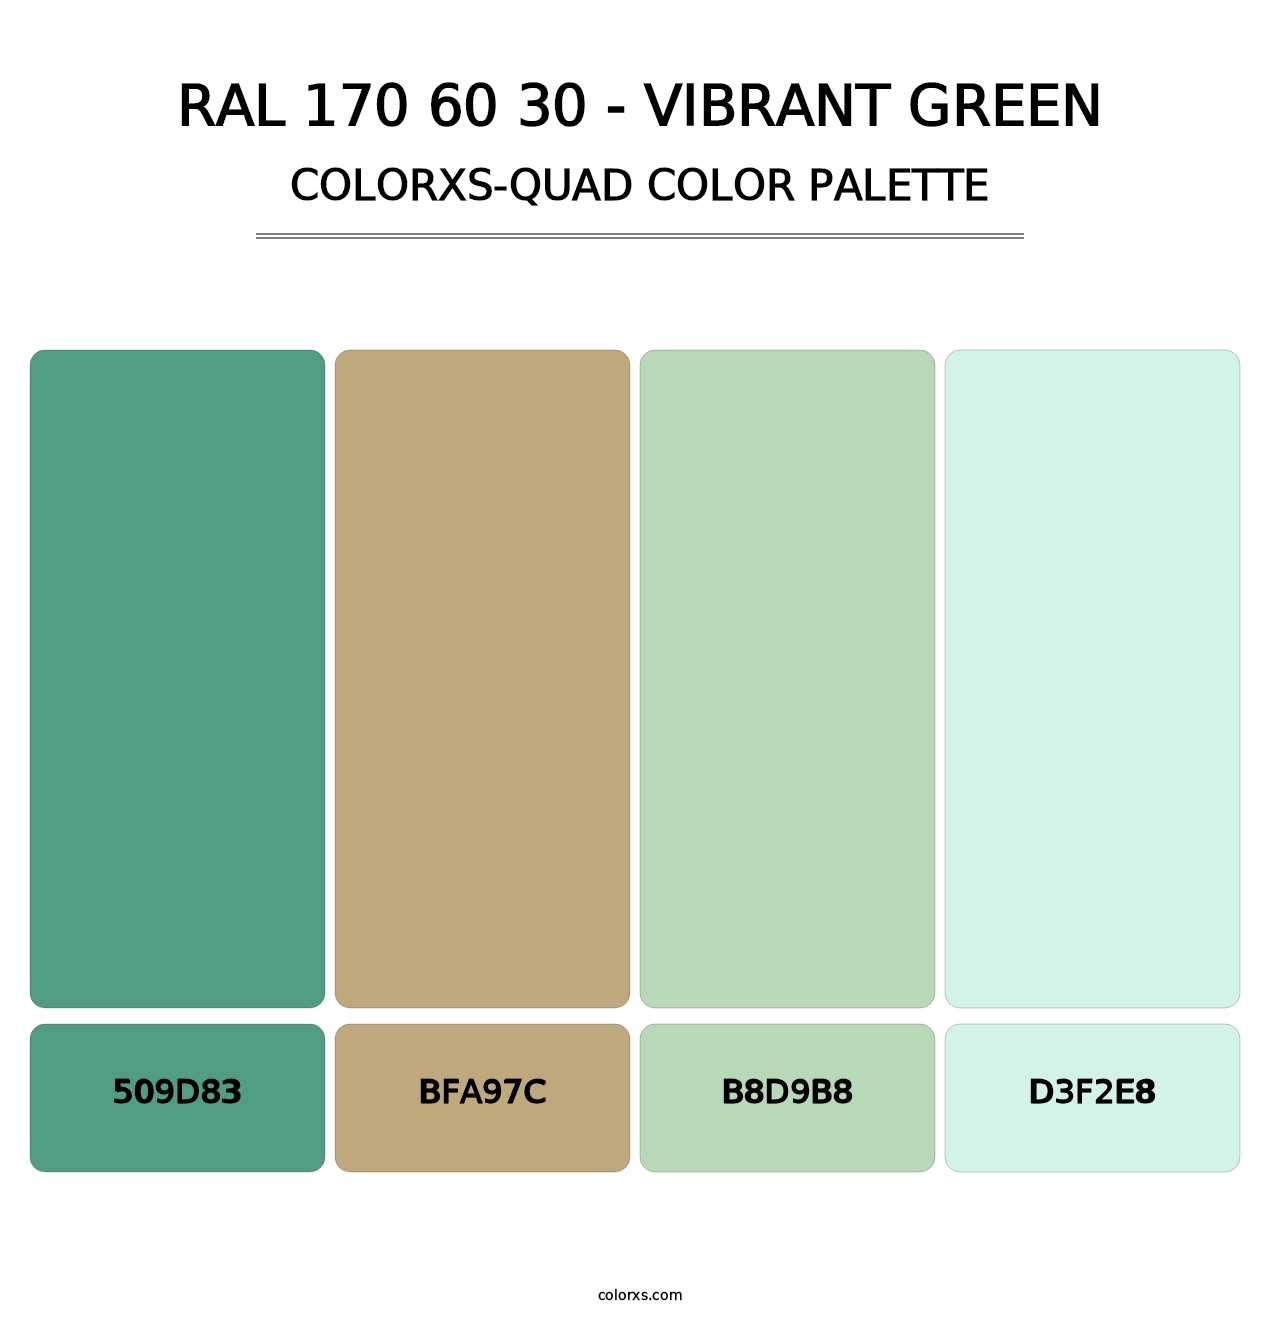 RAL 170 60 30 - Vibrant Green - Colorxs Quad Palette